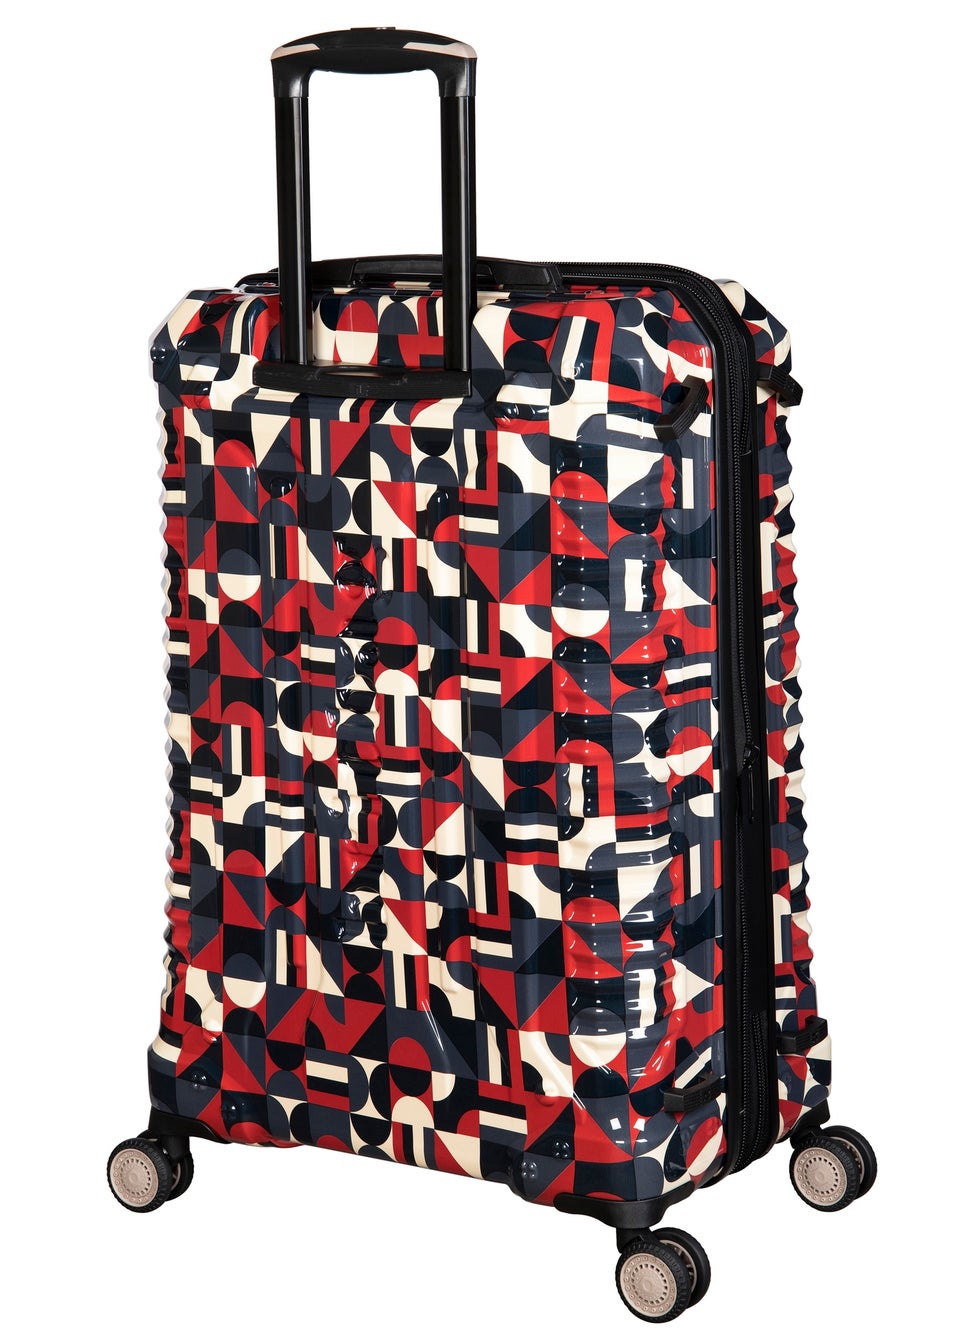 BritBag Annamite Skin Black/Red Geo Print Cabin Suitcase with TSA Lock